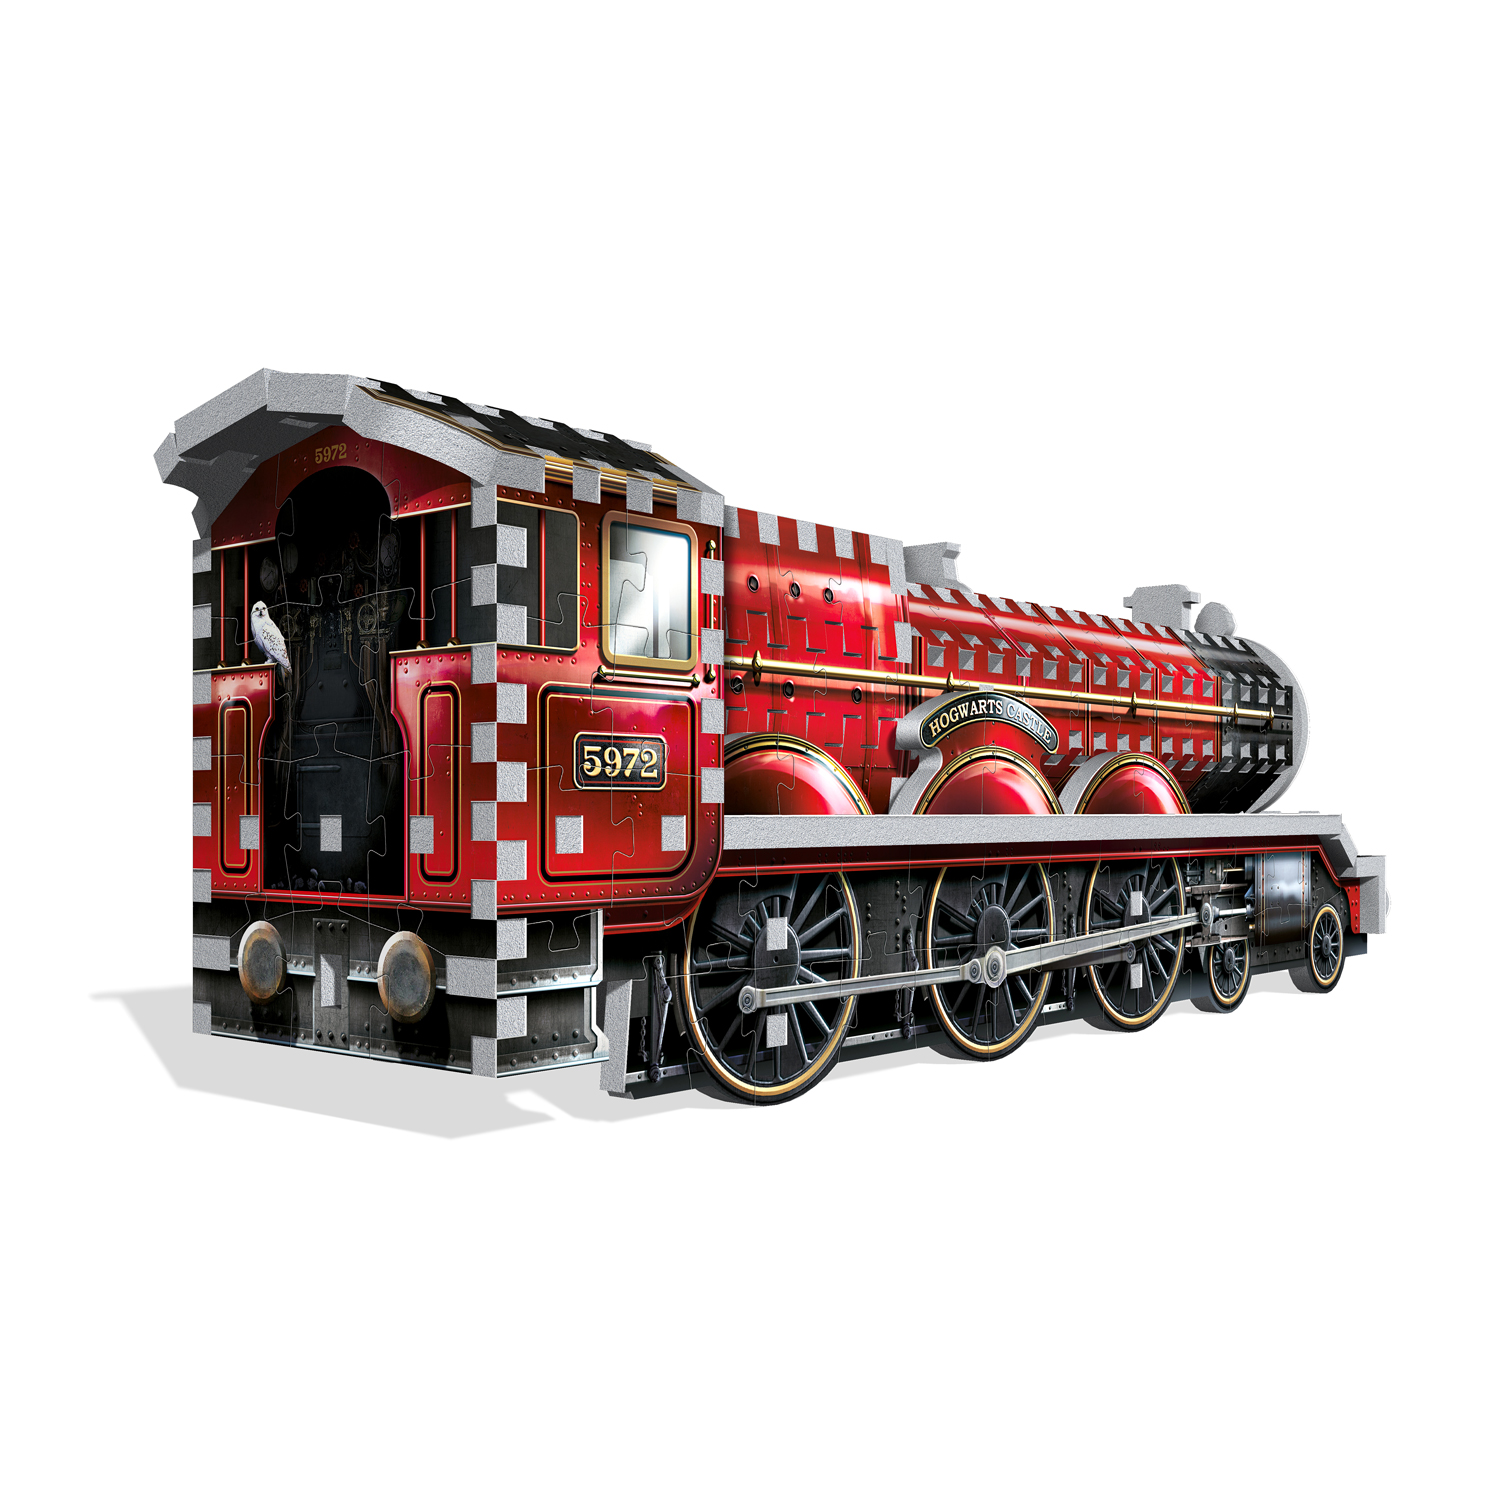 3D-Puzzle 460 Teile Hogwarts Express Zug/Hogwarts Express Train 